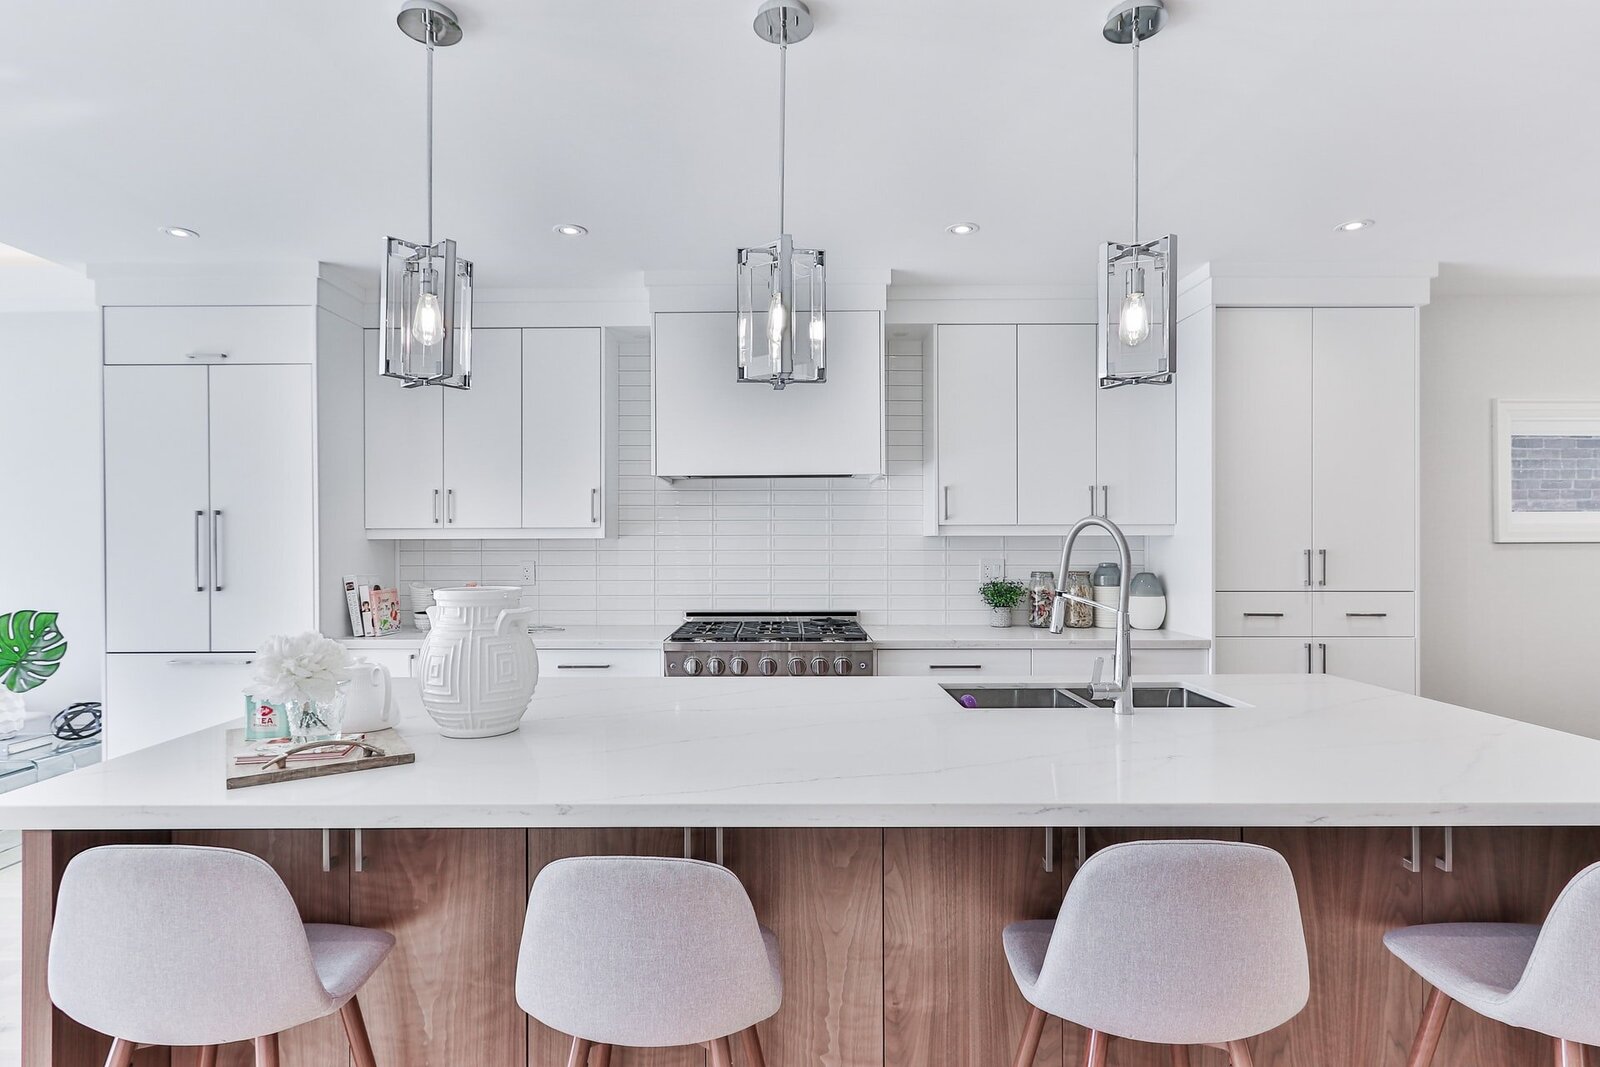 Atlanta home interior of kitchen with white cabinets